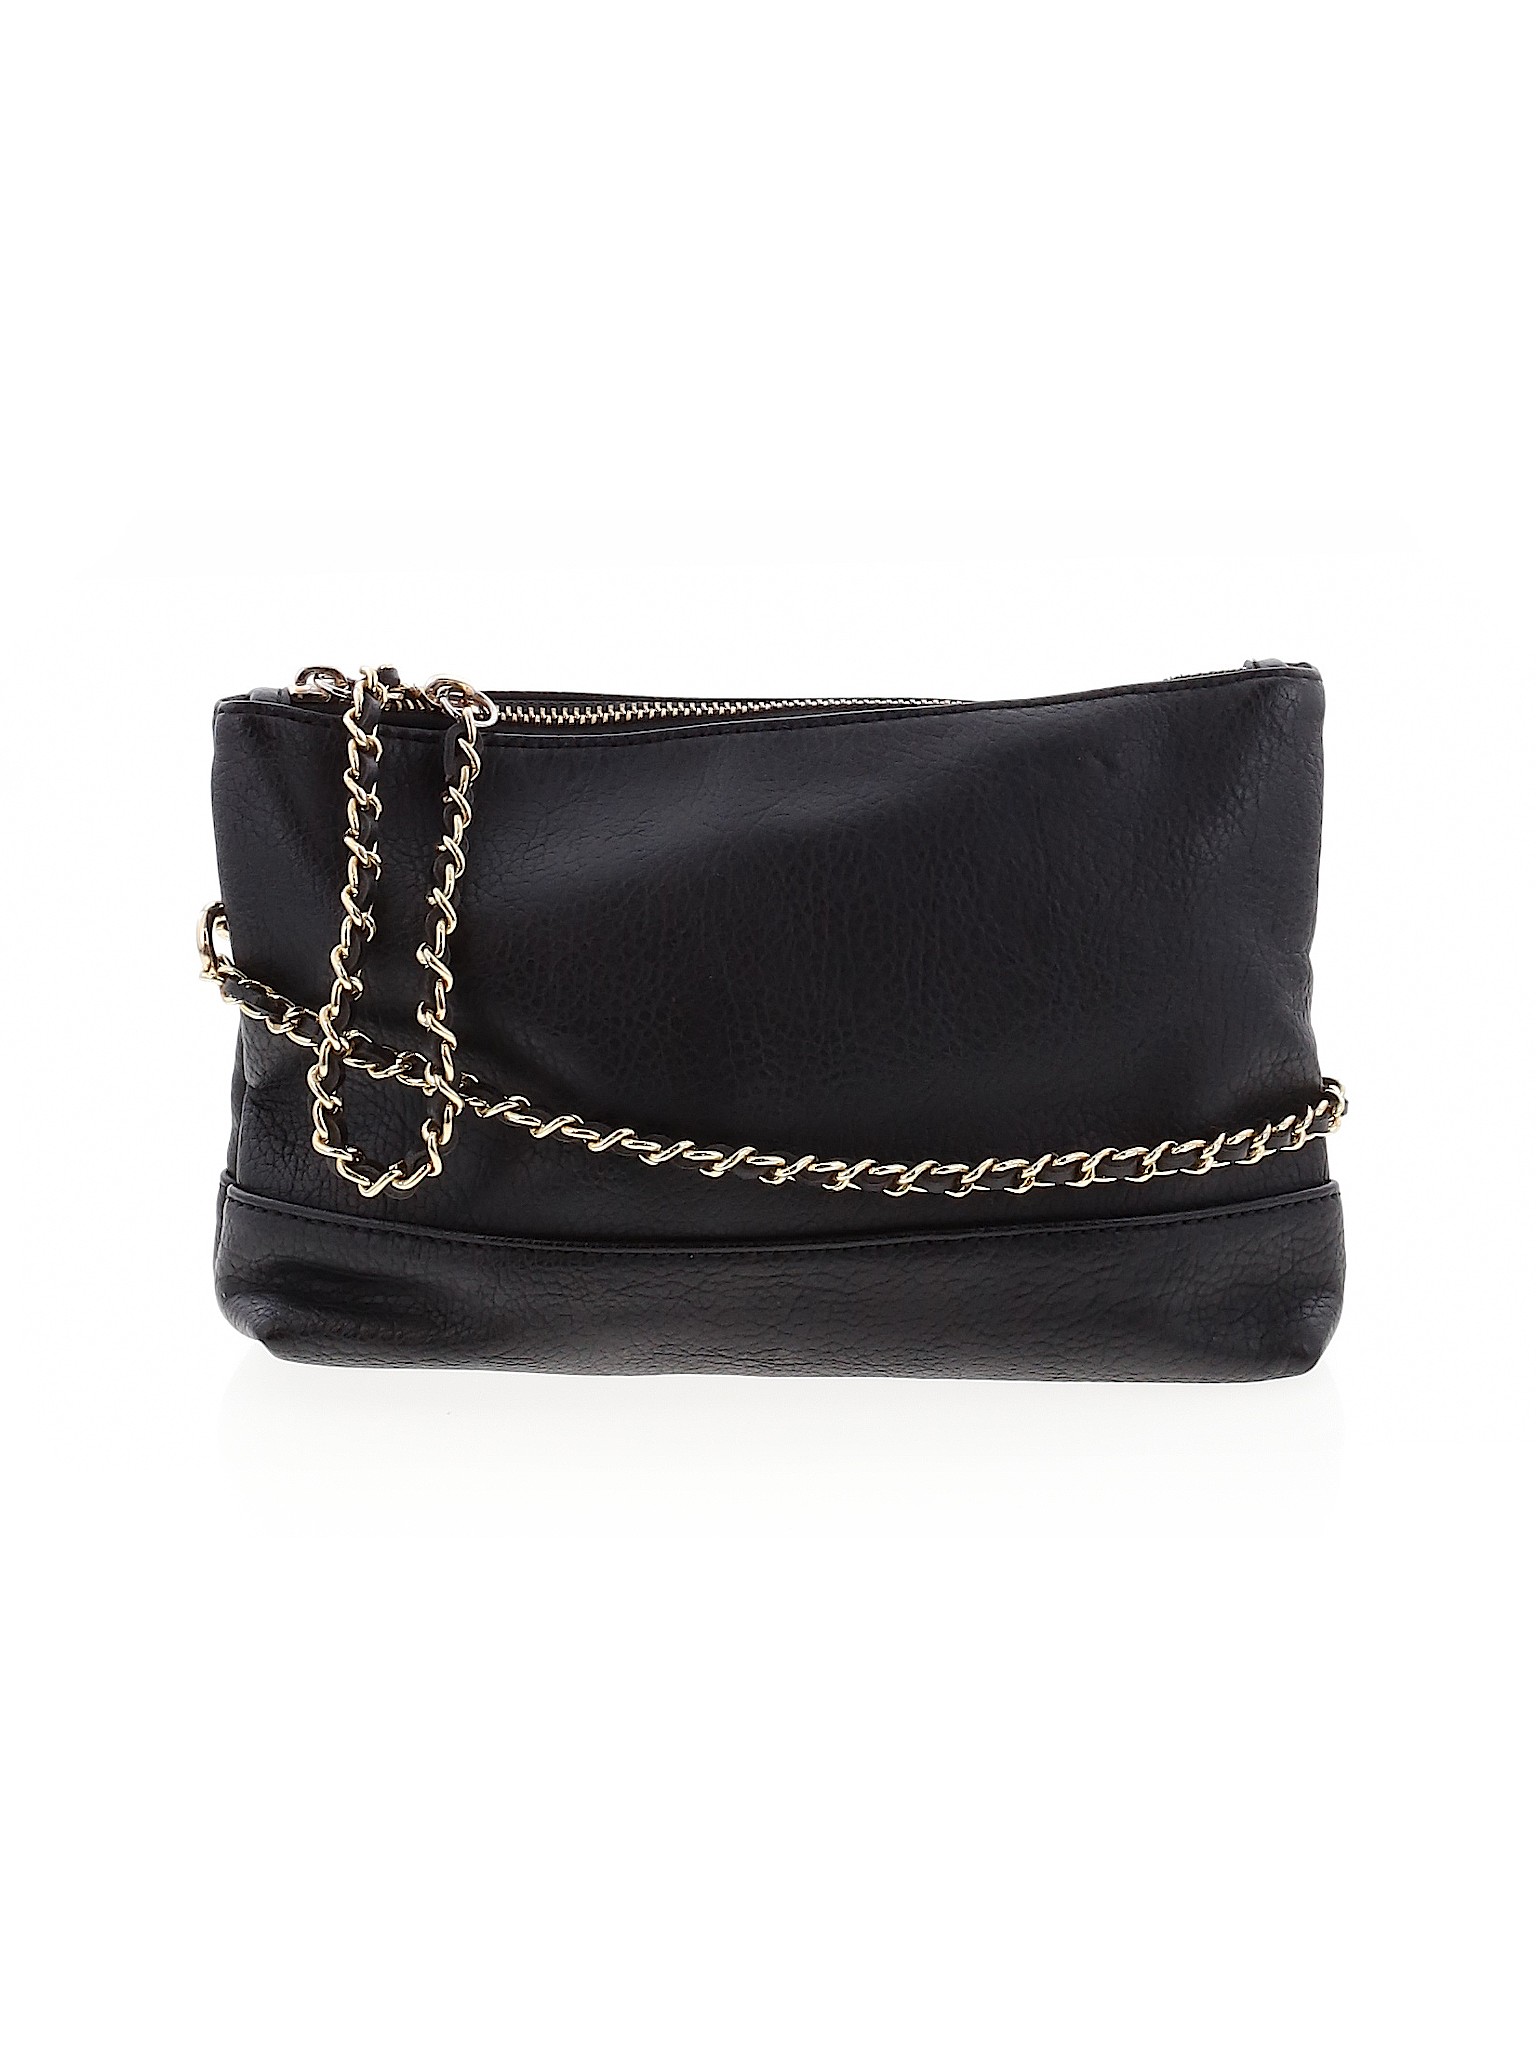 BP. Women Black Crossbody Bag One Size | eBay